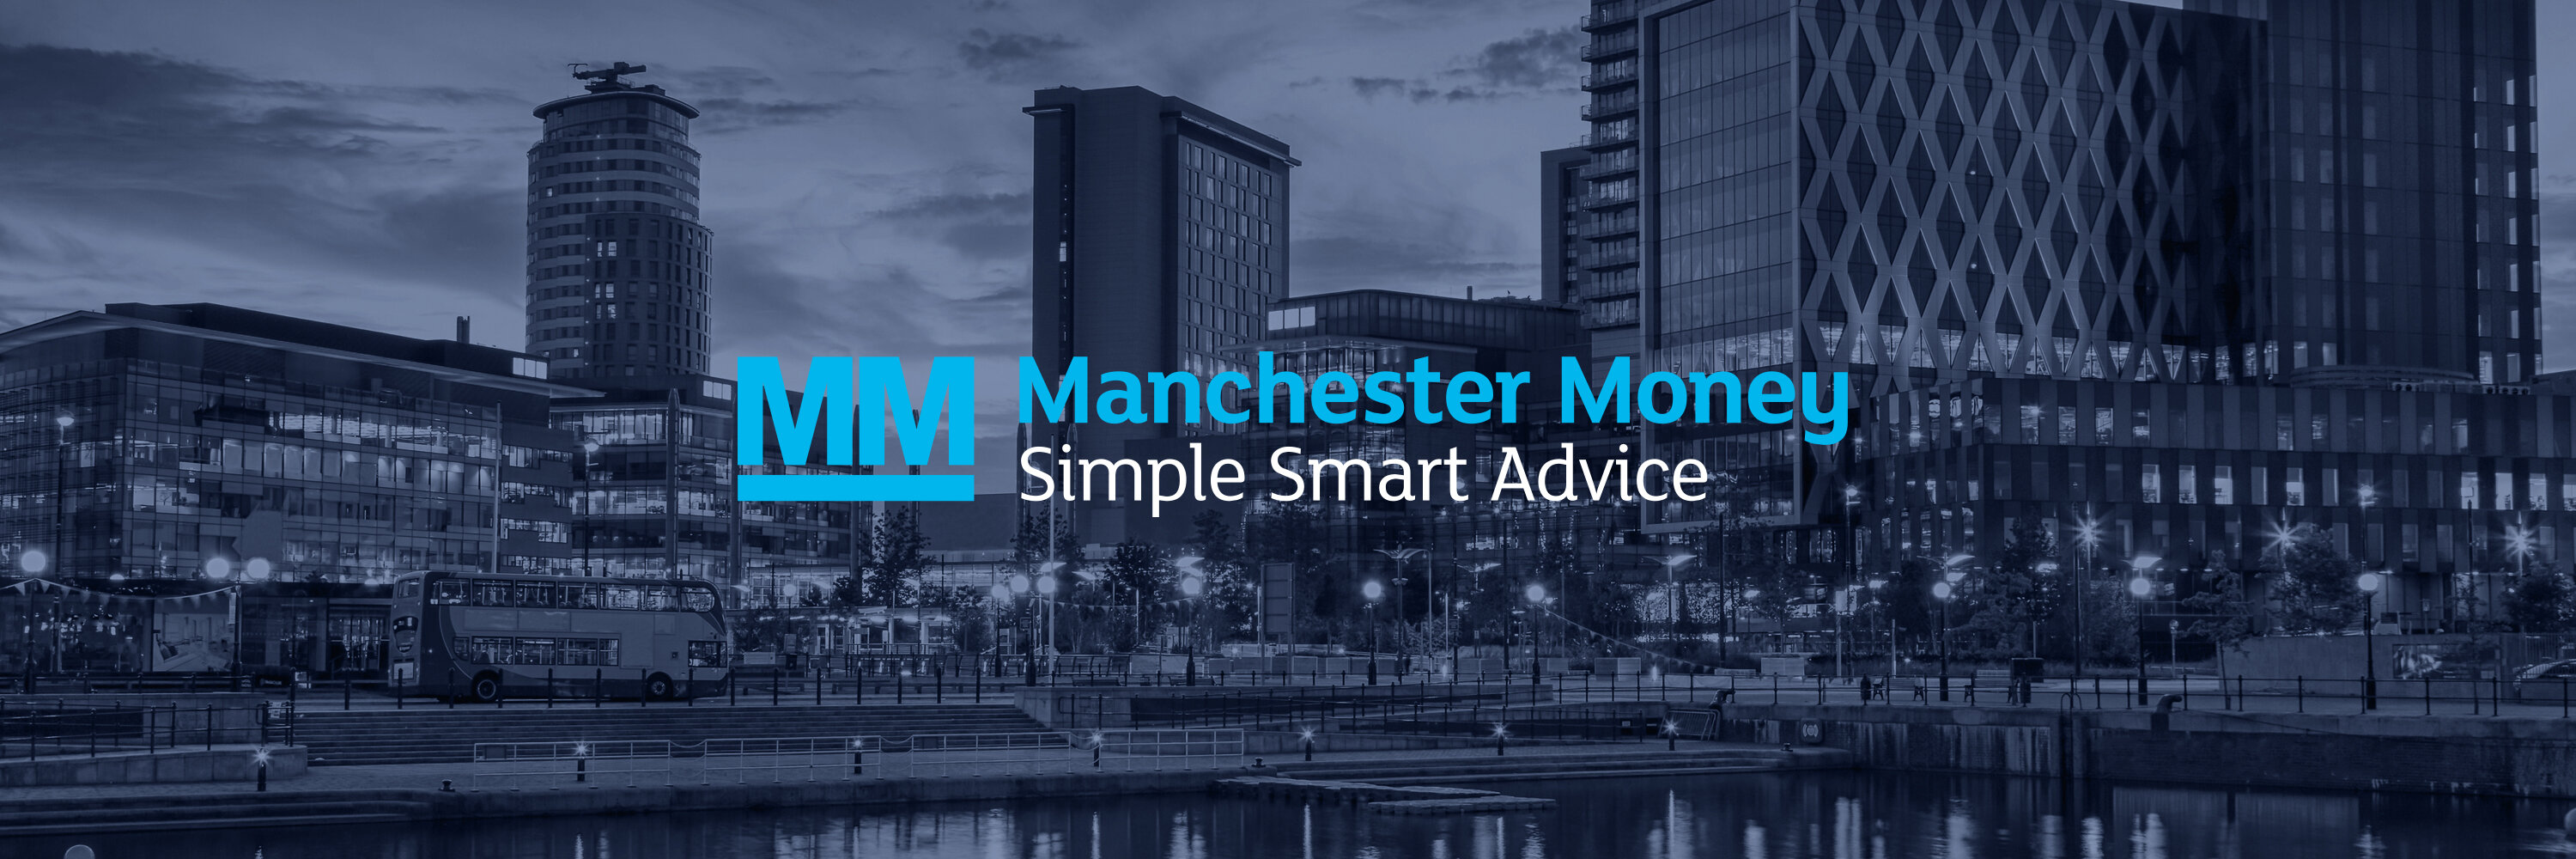 Manchester Money Ltd Main Logo